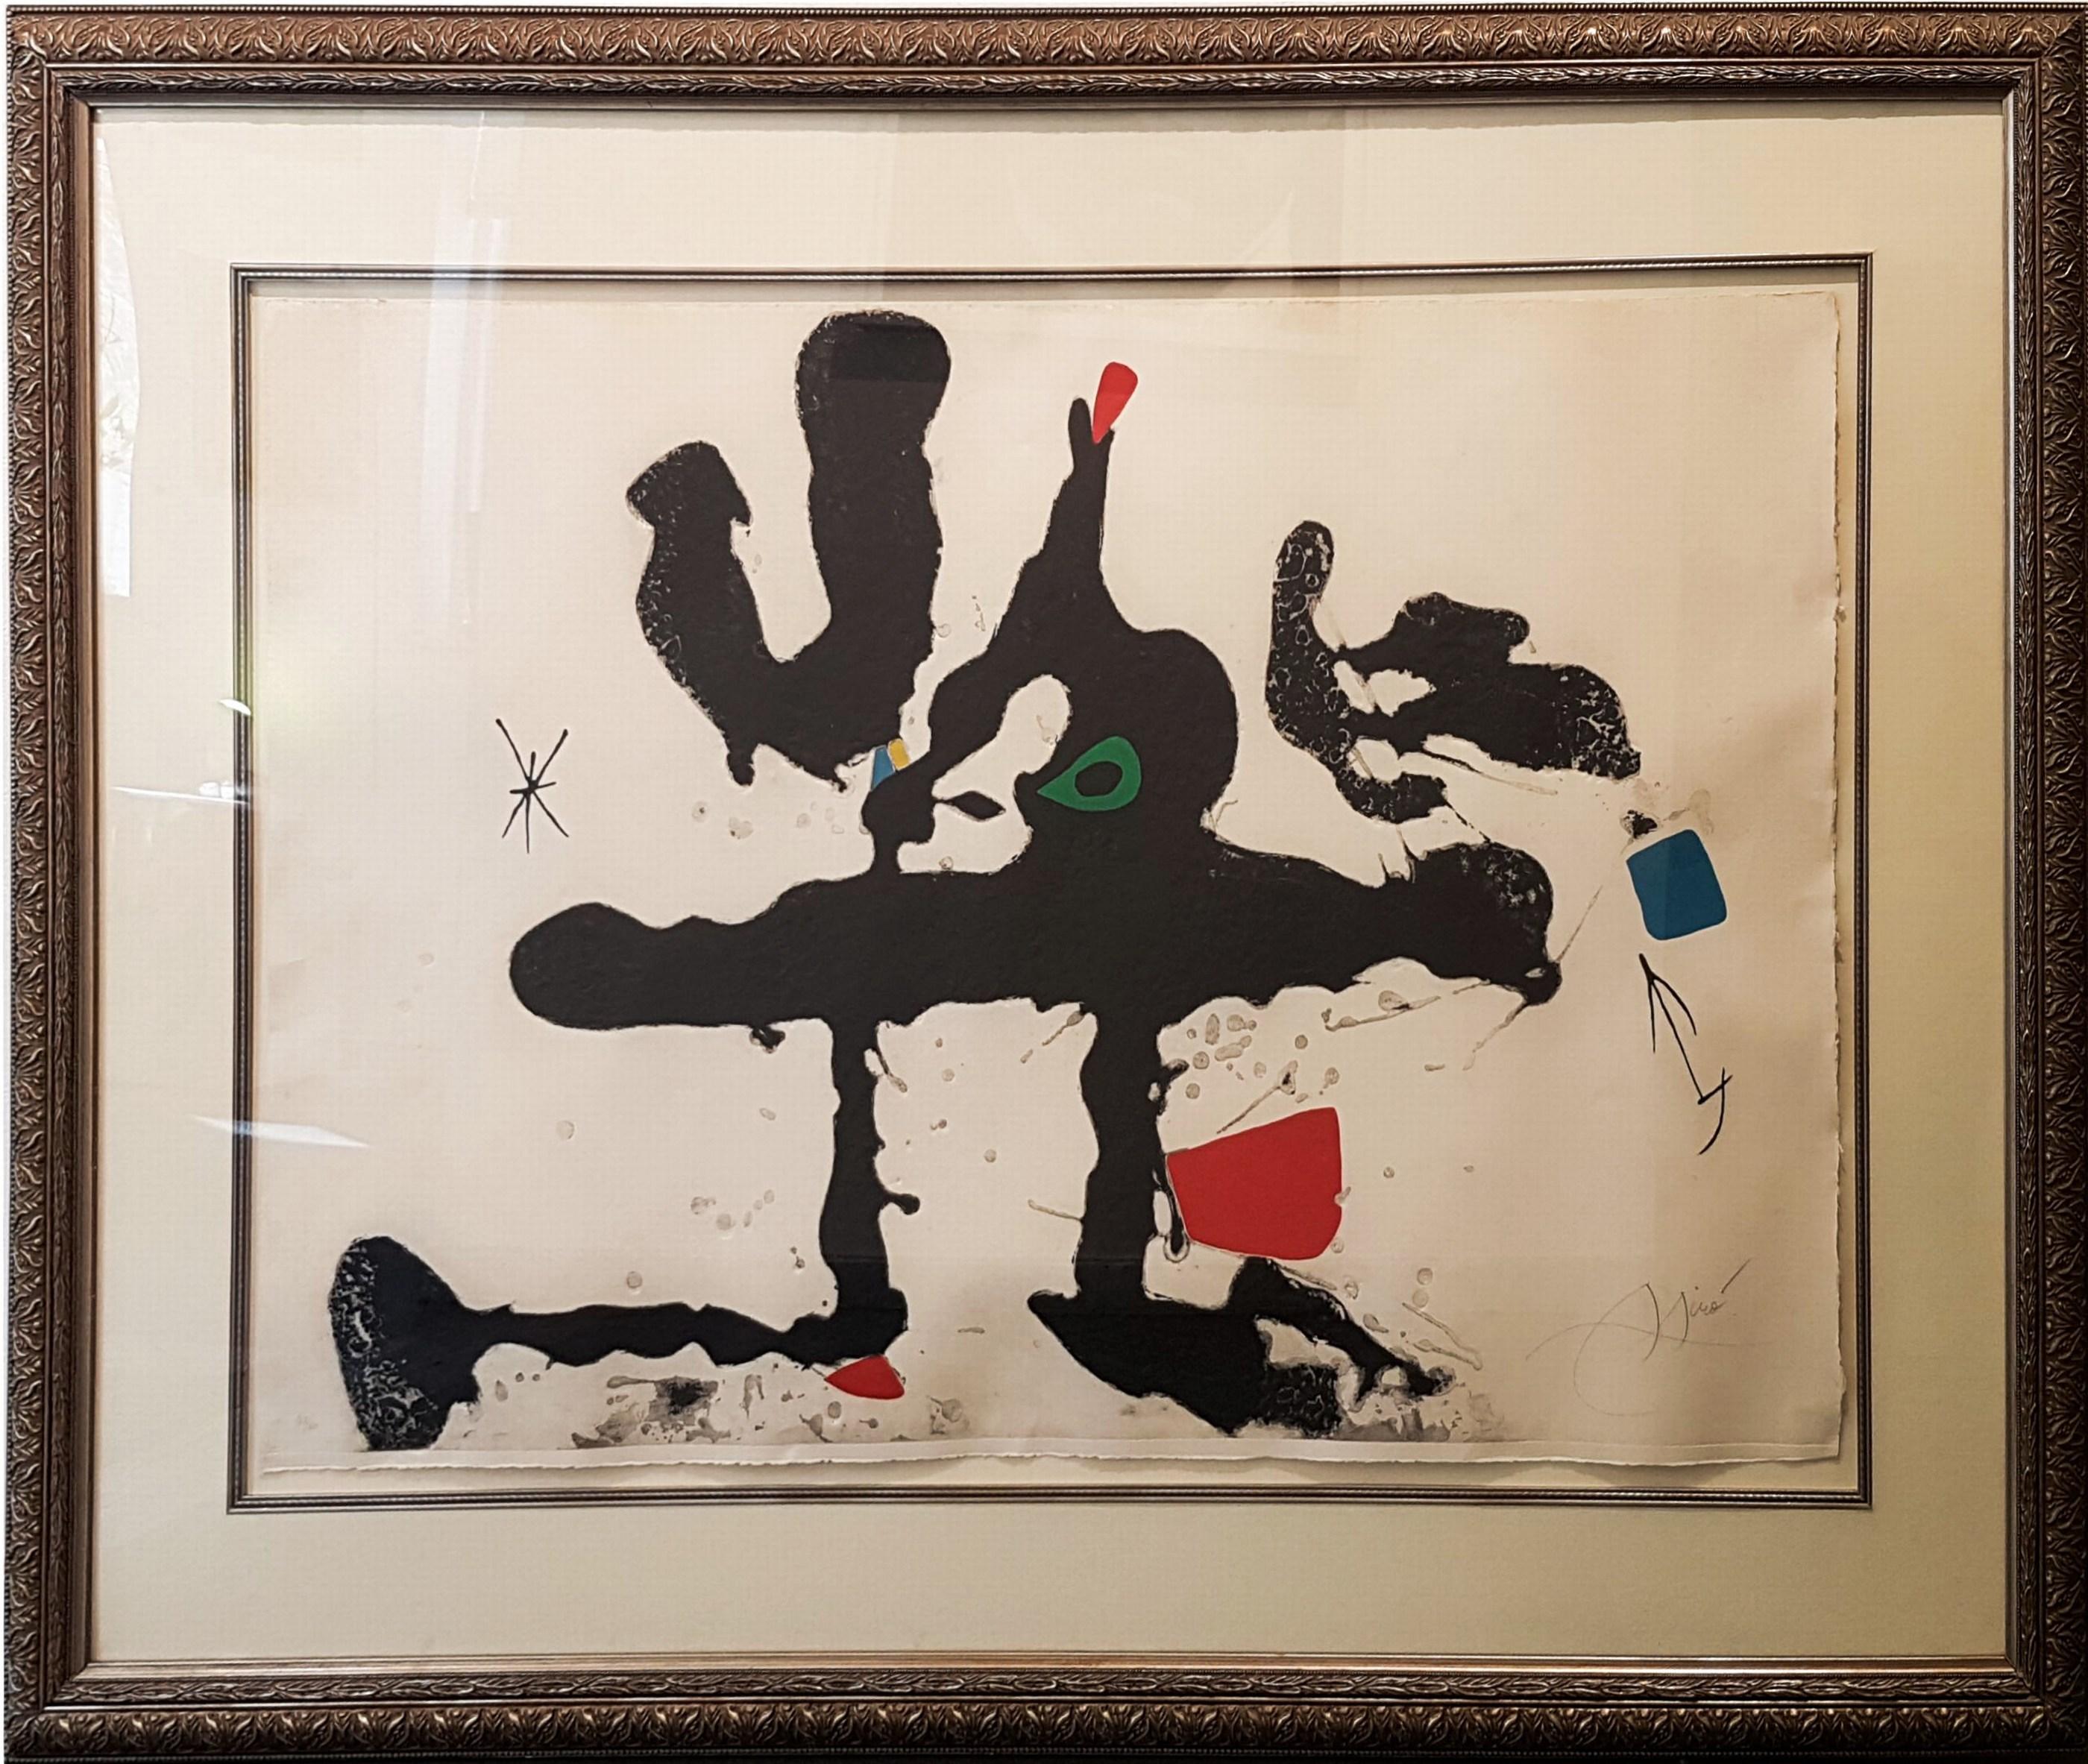 Barcelona III (from Barcelona Suite)  - Print by Joan Miró